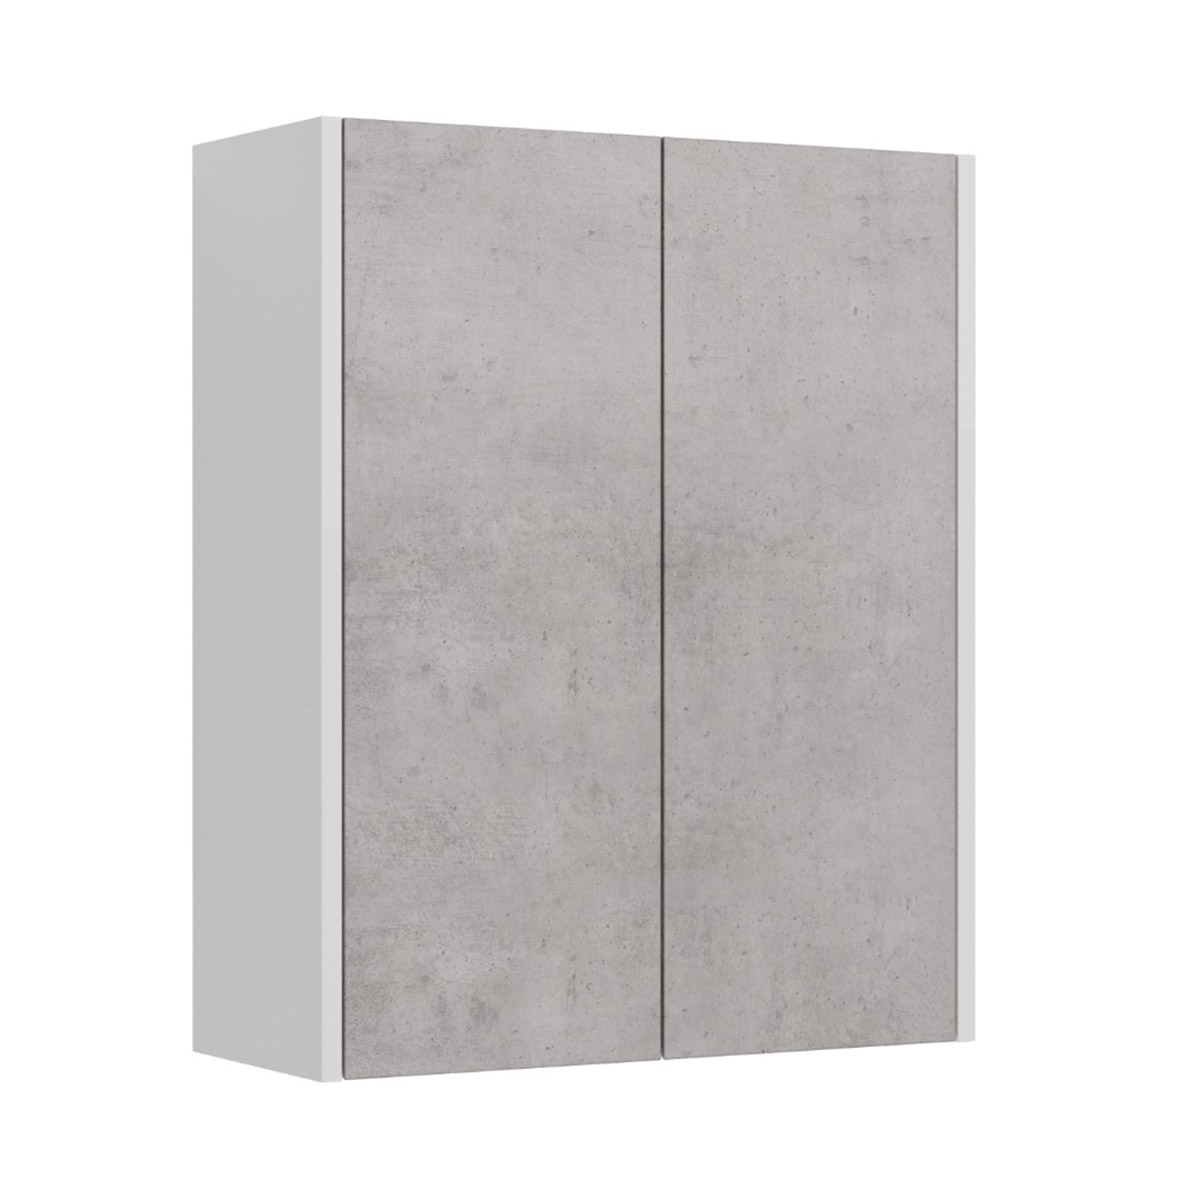 Шкаф Lemark COMBI 60 см подвесной, 2-х дверный, цвет фасада: Бетон, цвет корпуса: Белый глянец